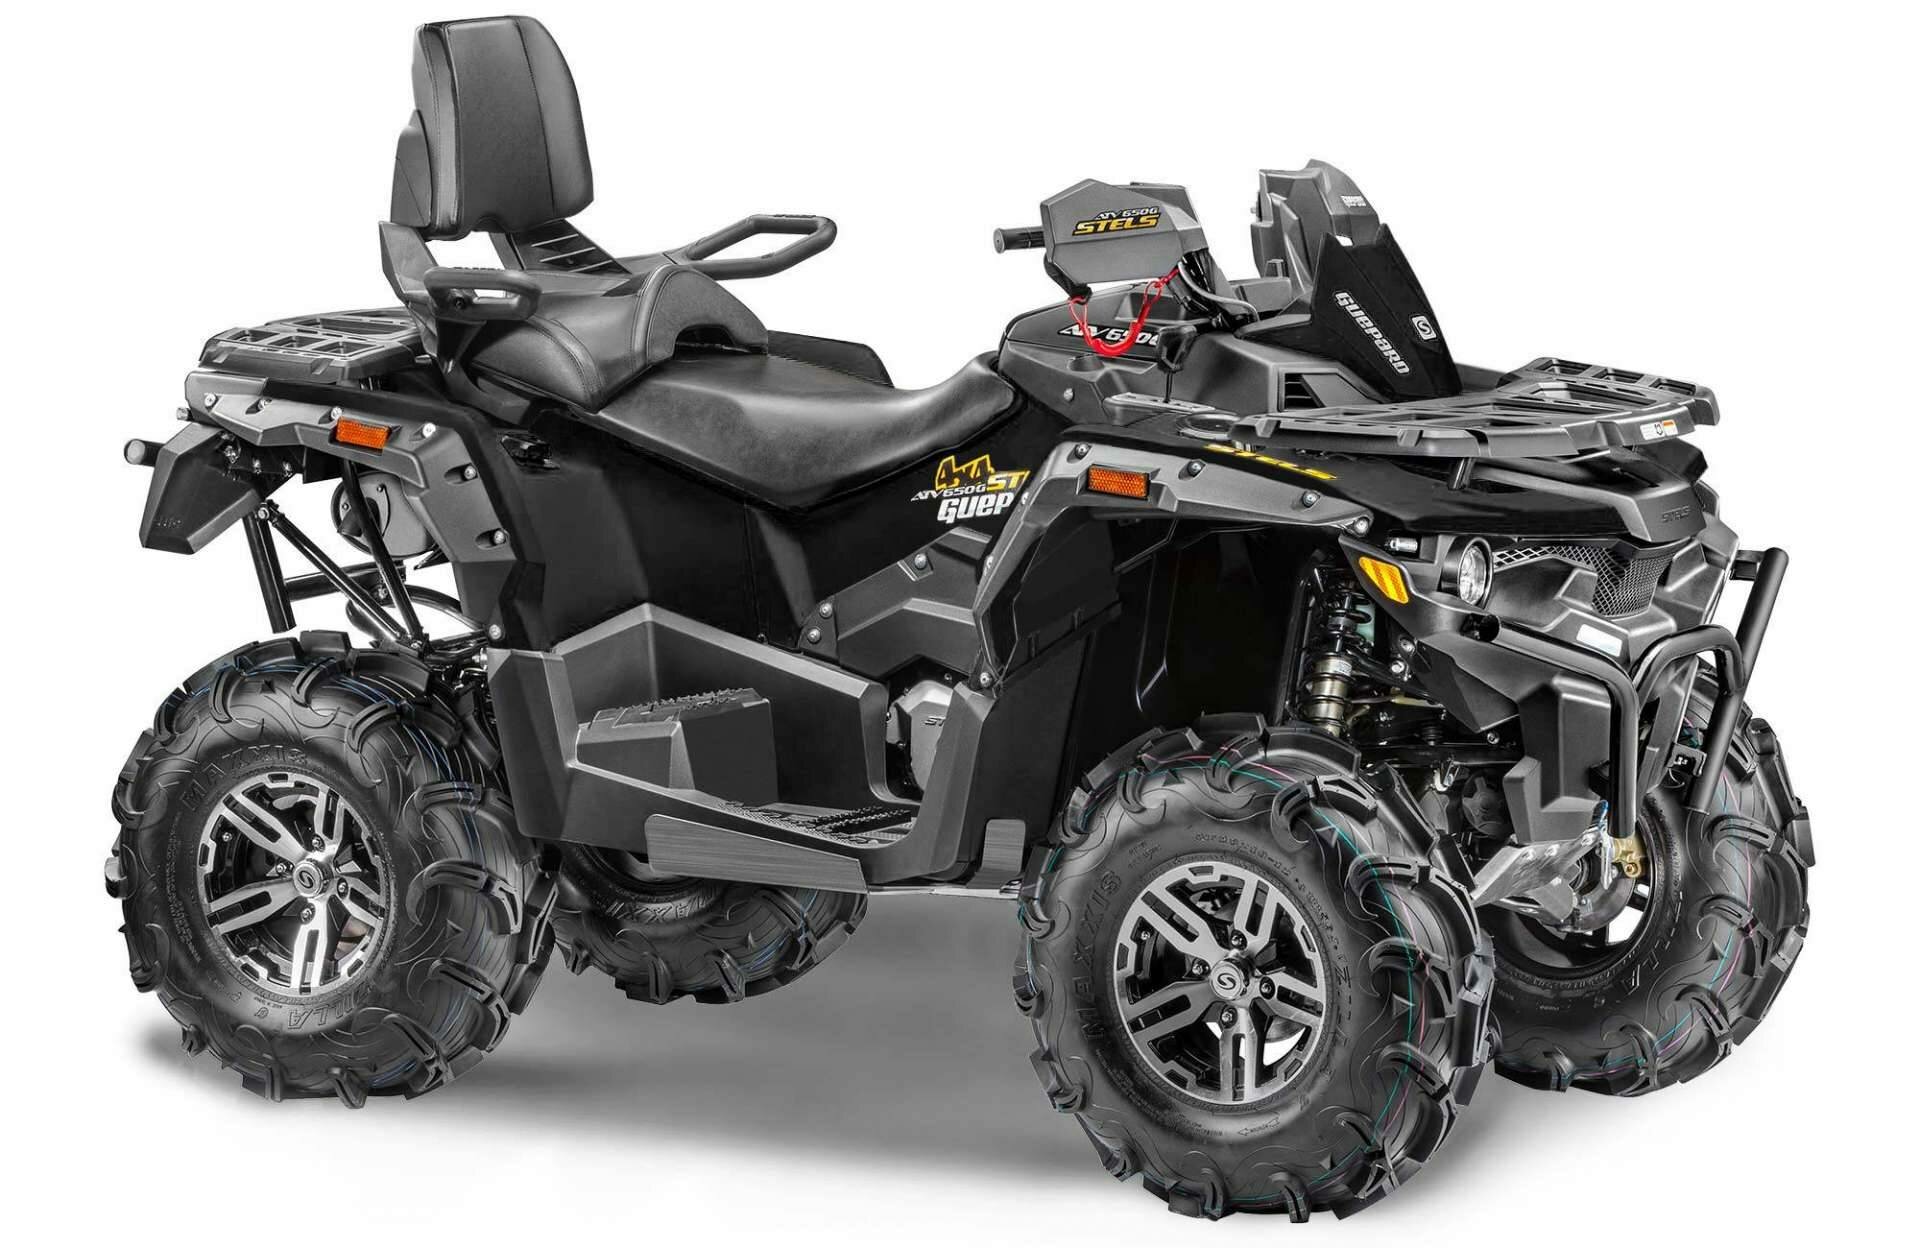 Квадроцикл Stels ATV 650 Guepard Trophy EPS Карбон - Раздел: Автотовары, мототовары